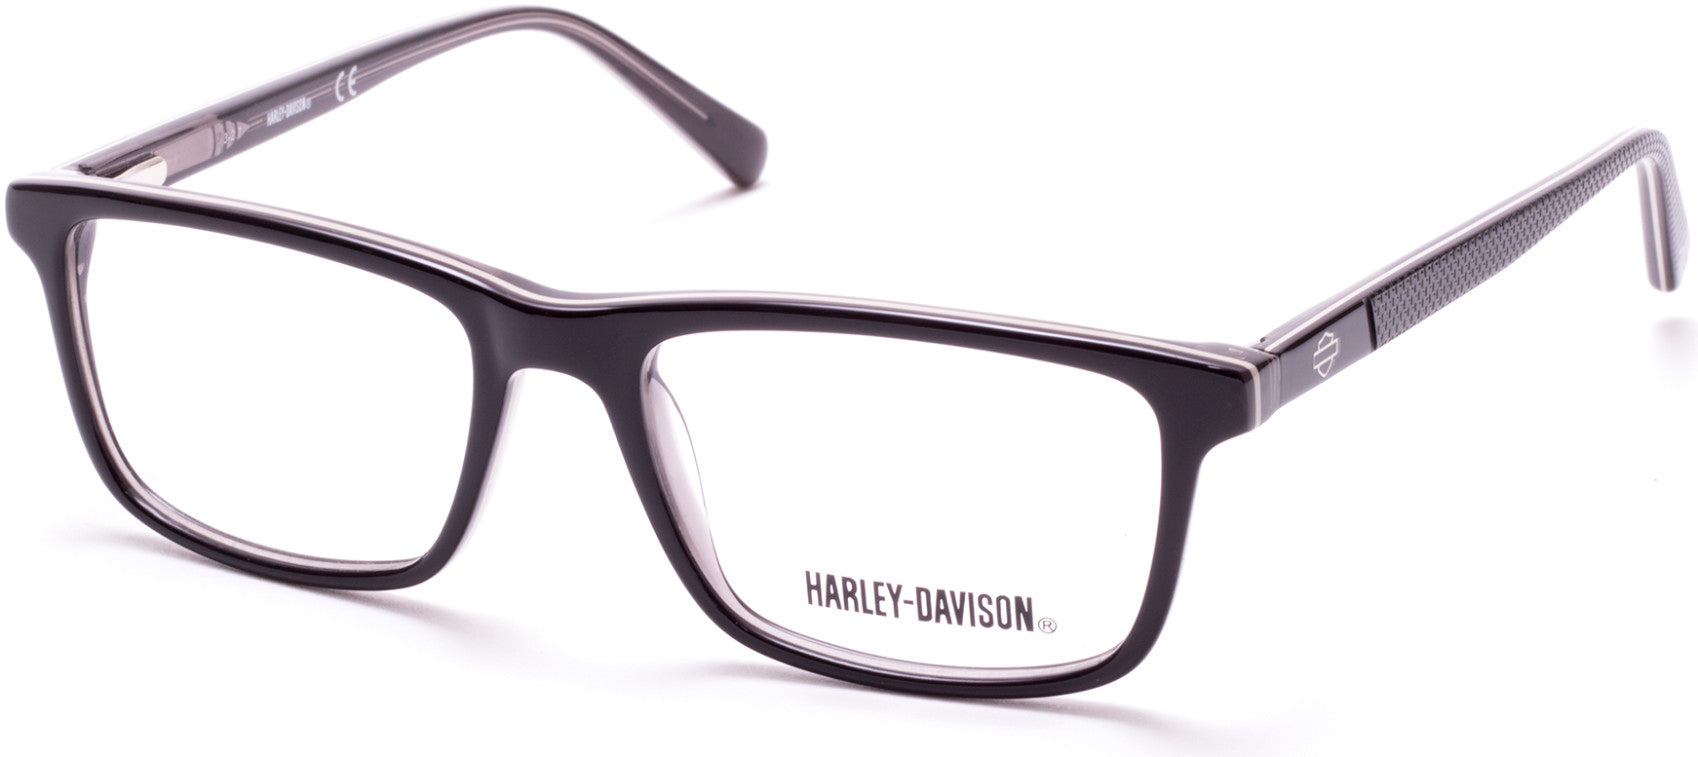 Harley-Davidson HD0133T Geometric Eyeglasses 001-001 - Shiny Black